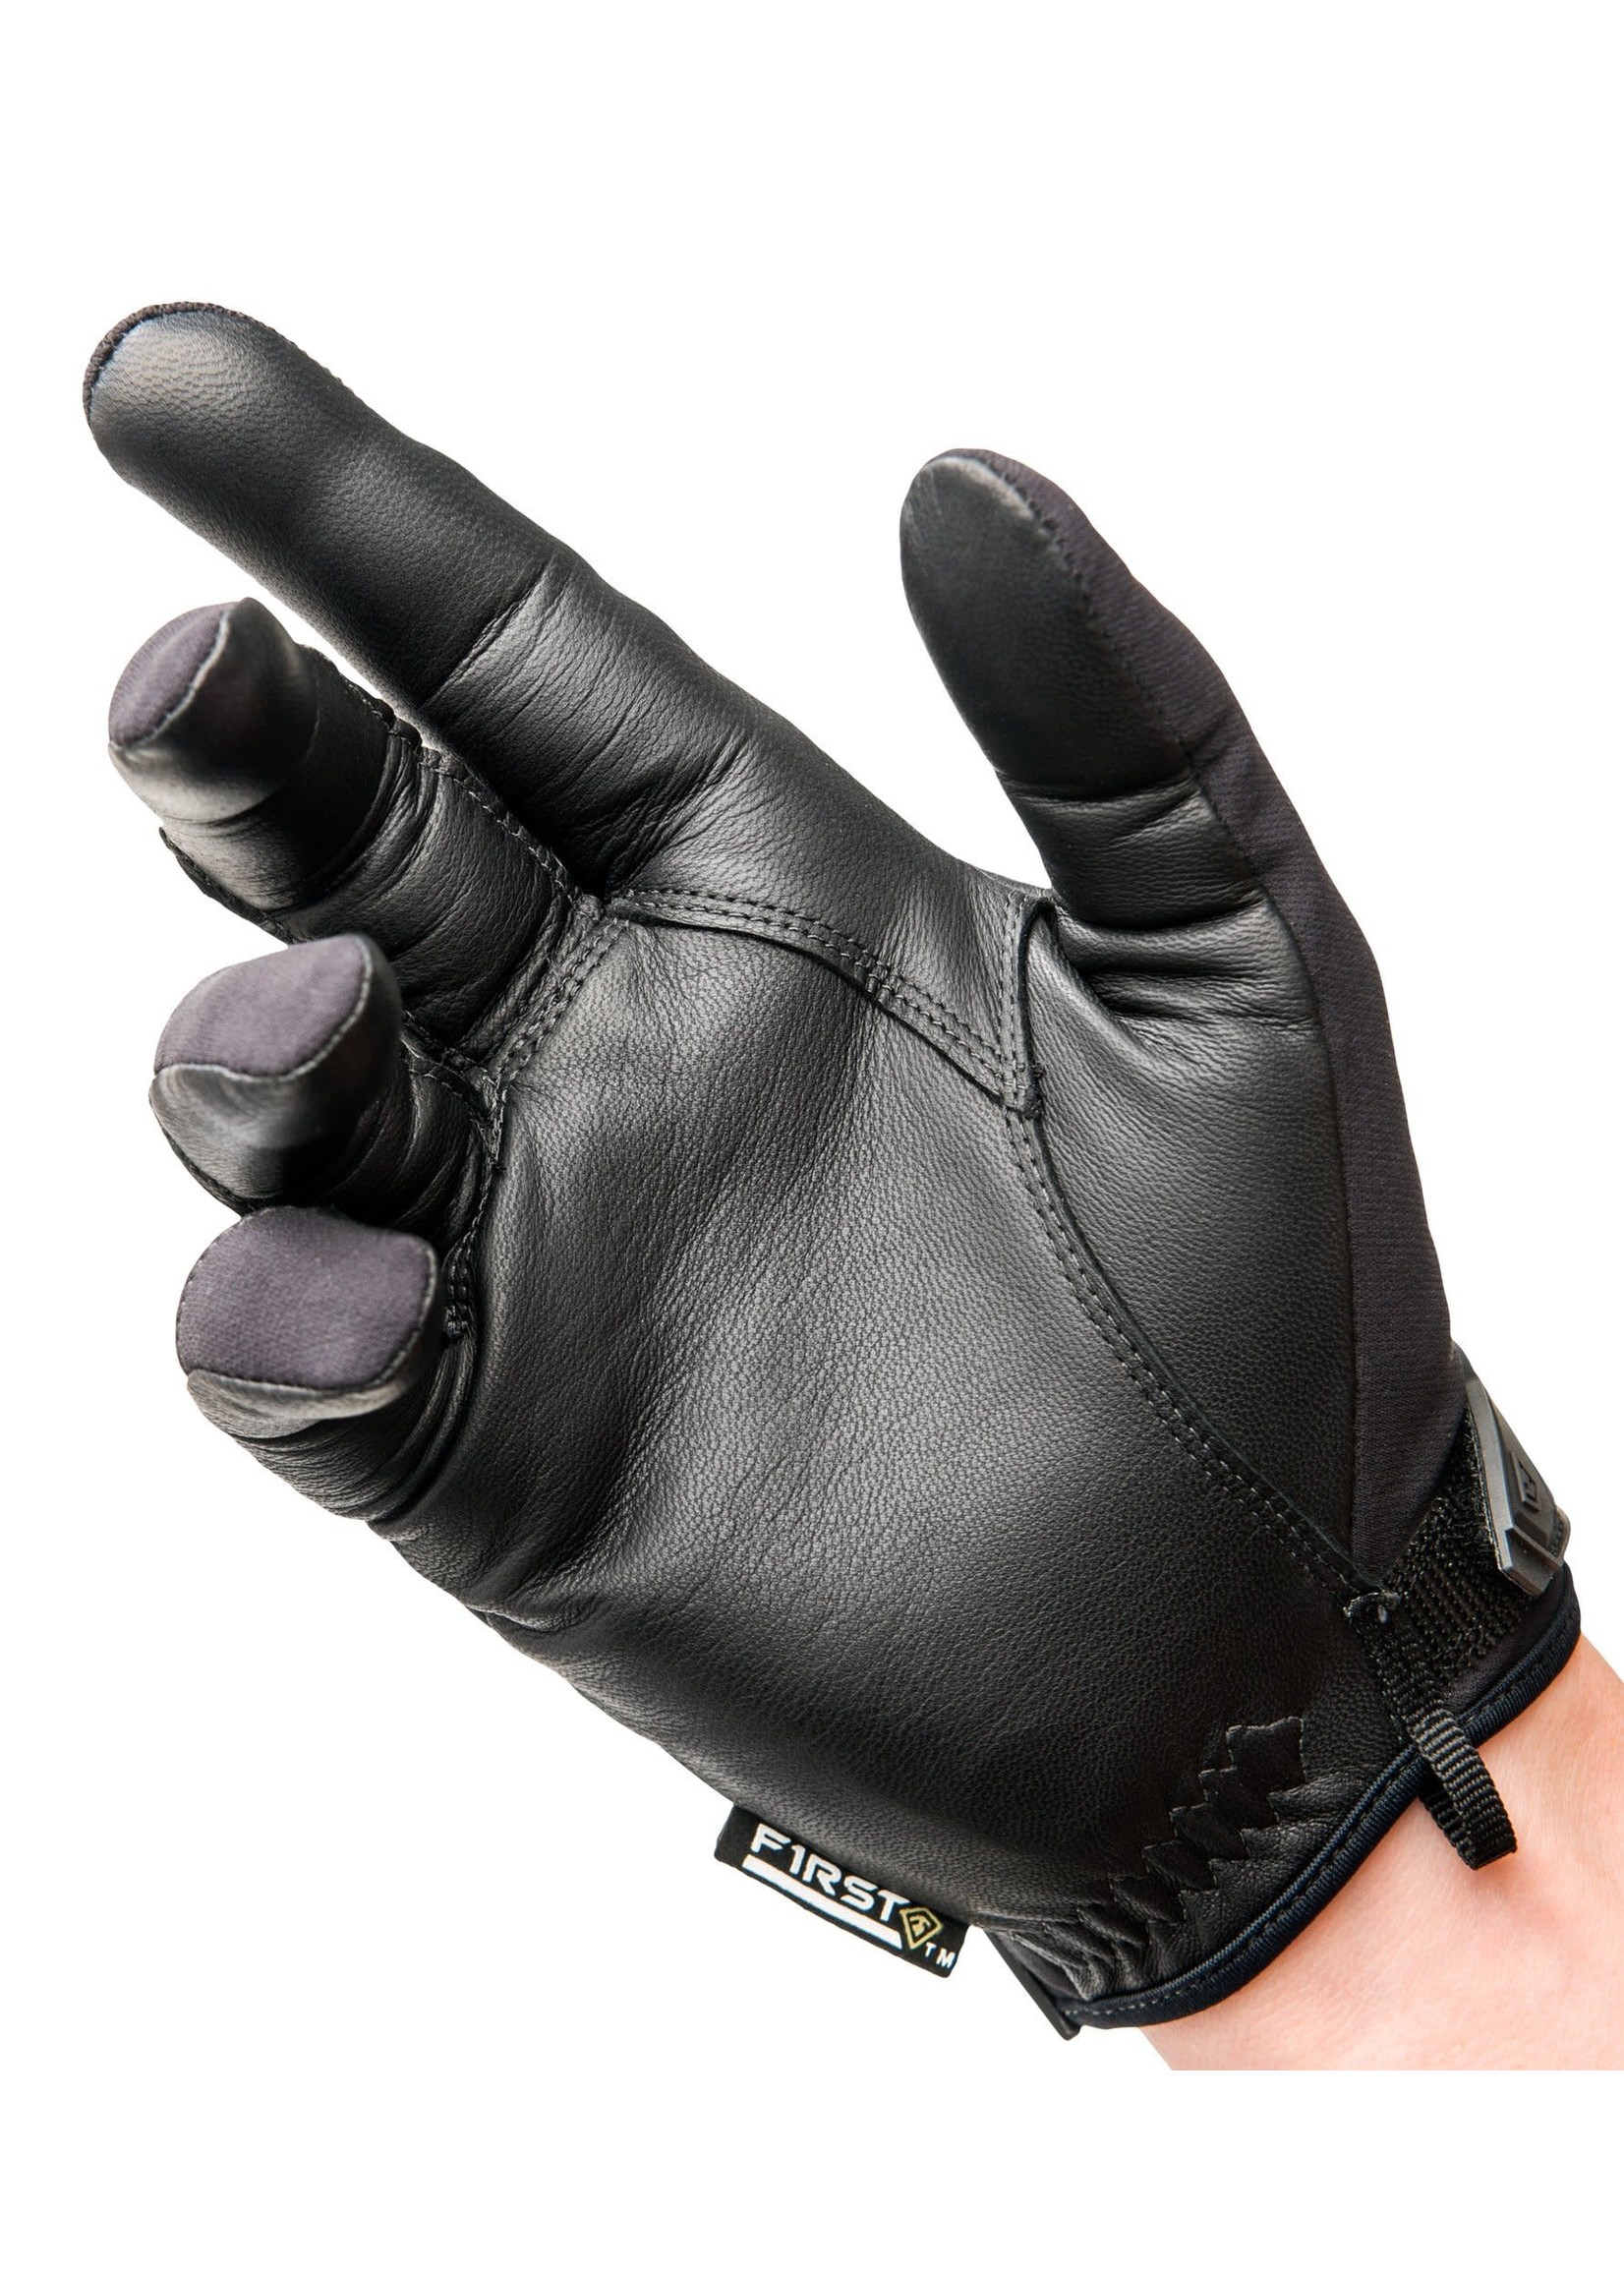 First Tactical First Tactical Men's Medium Duty Padded Glove